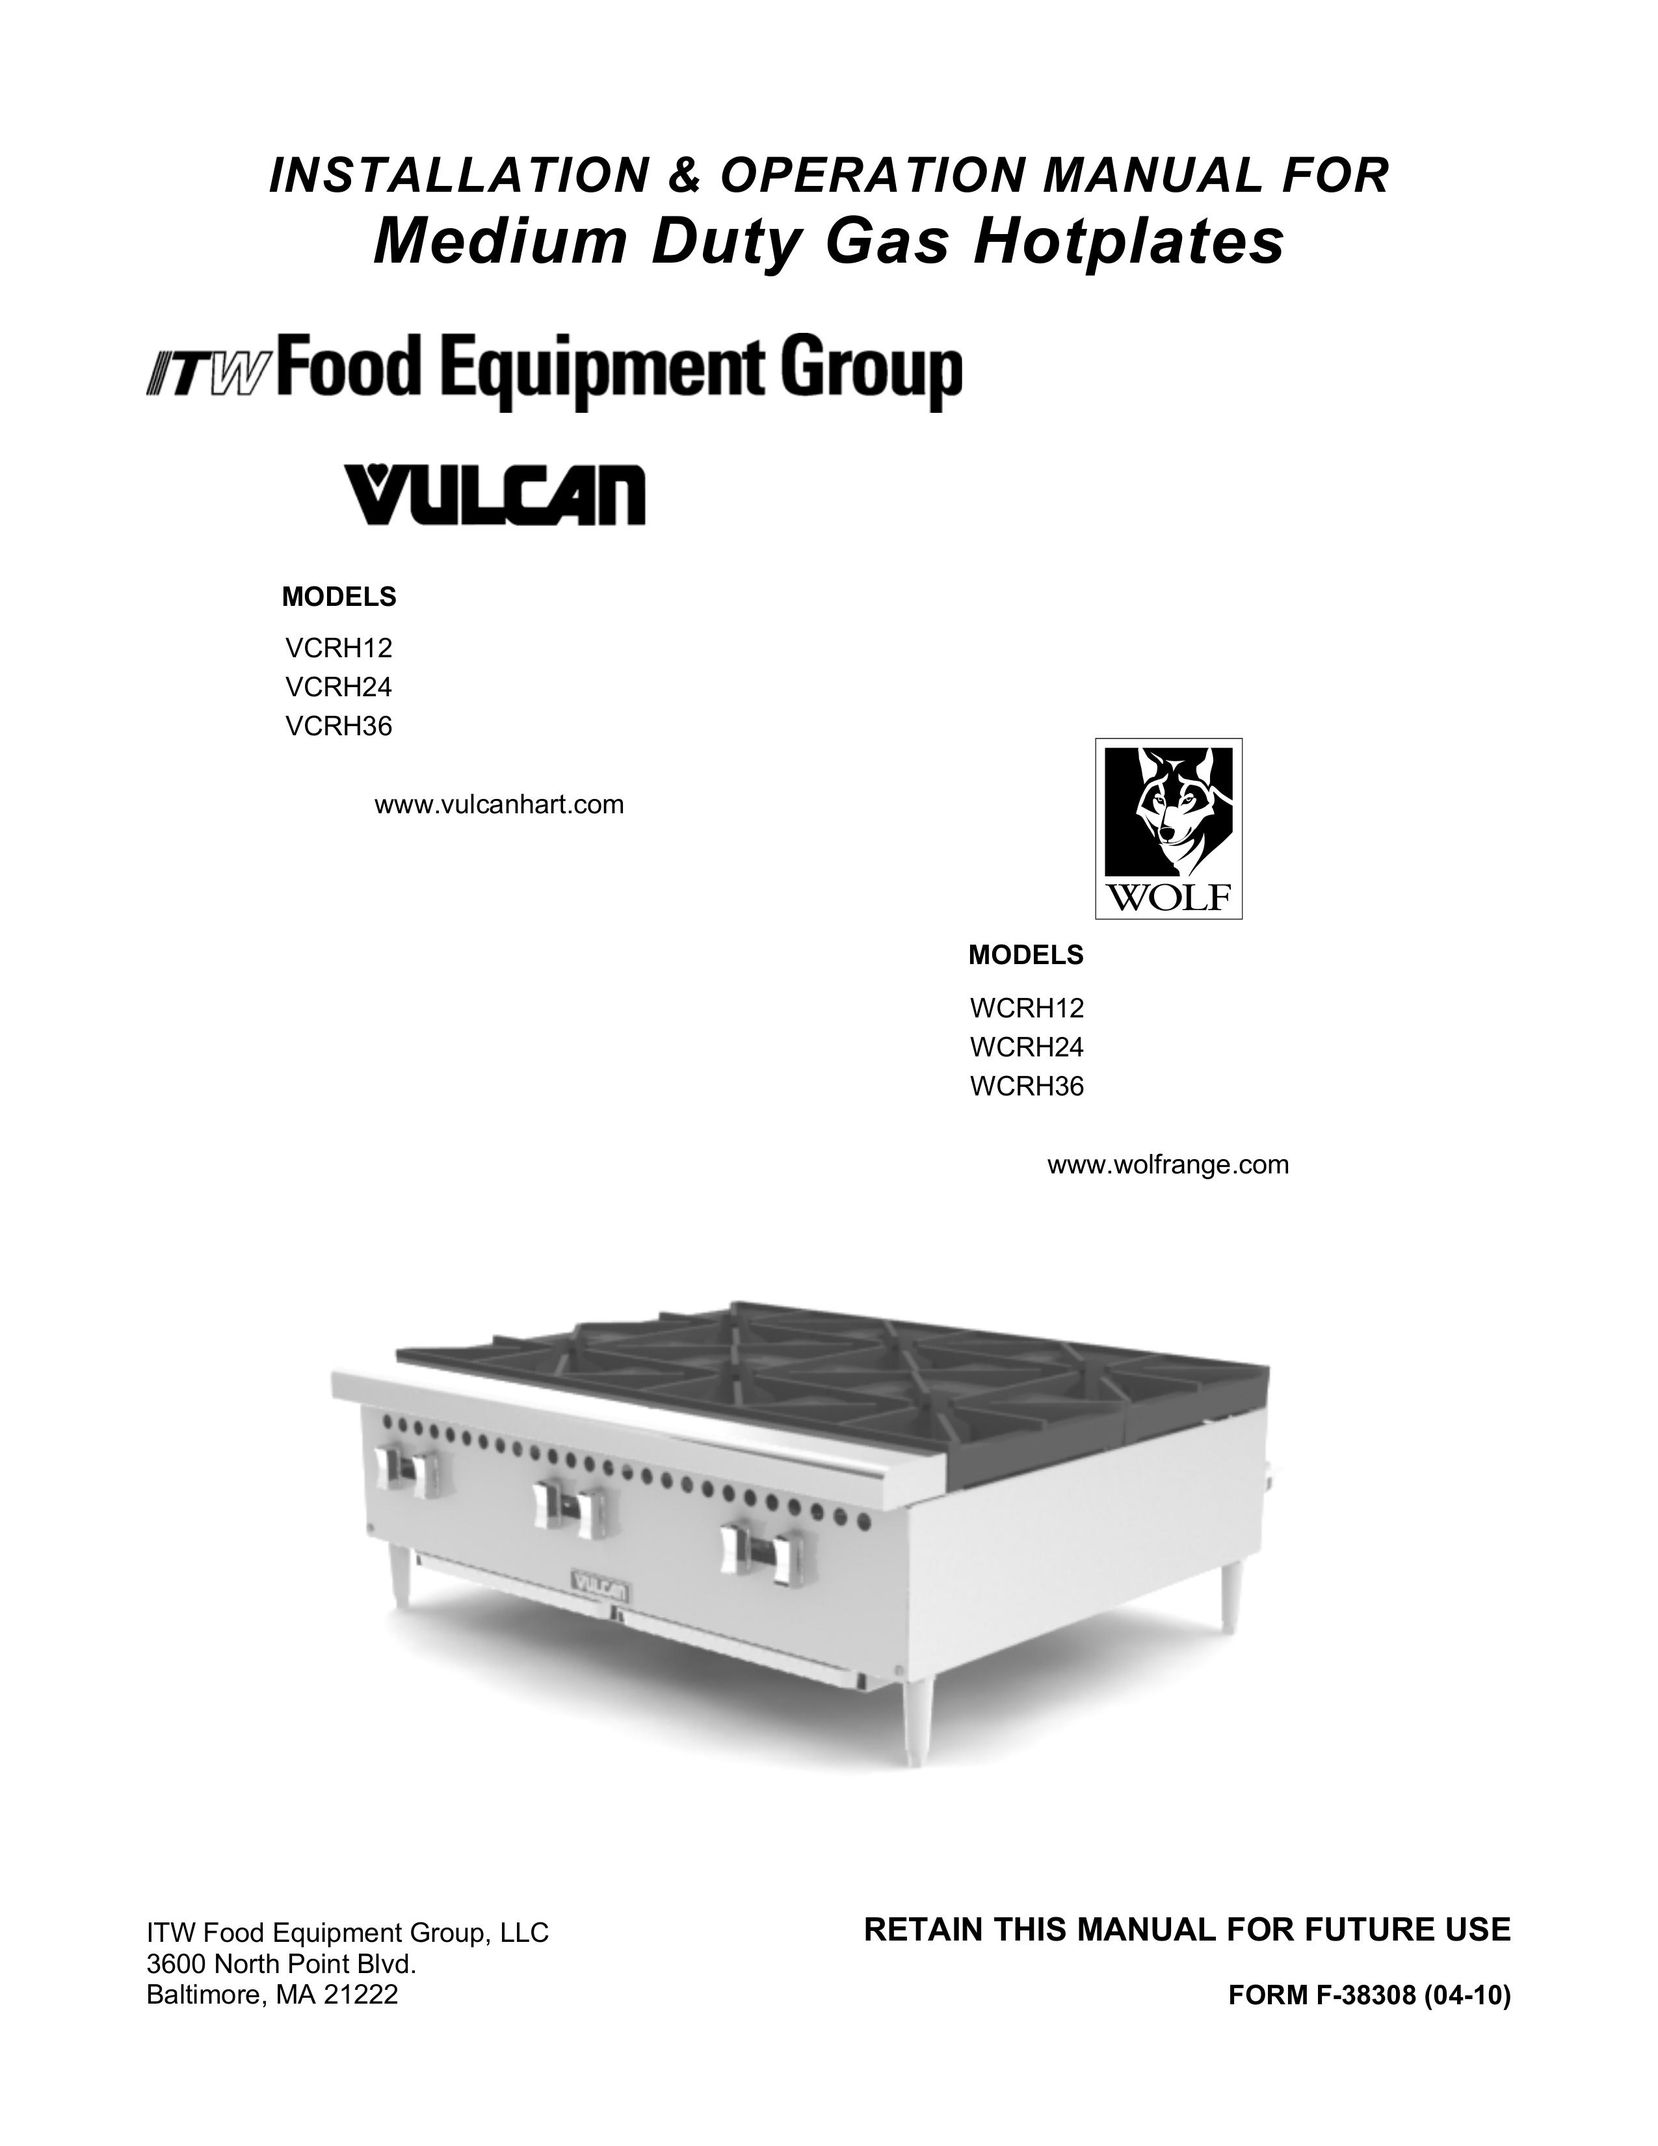 Vulcan-Hart VCRH12 Food Warmer User Manual